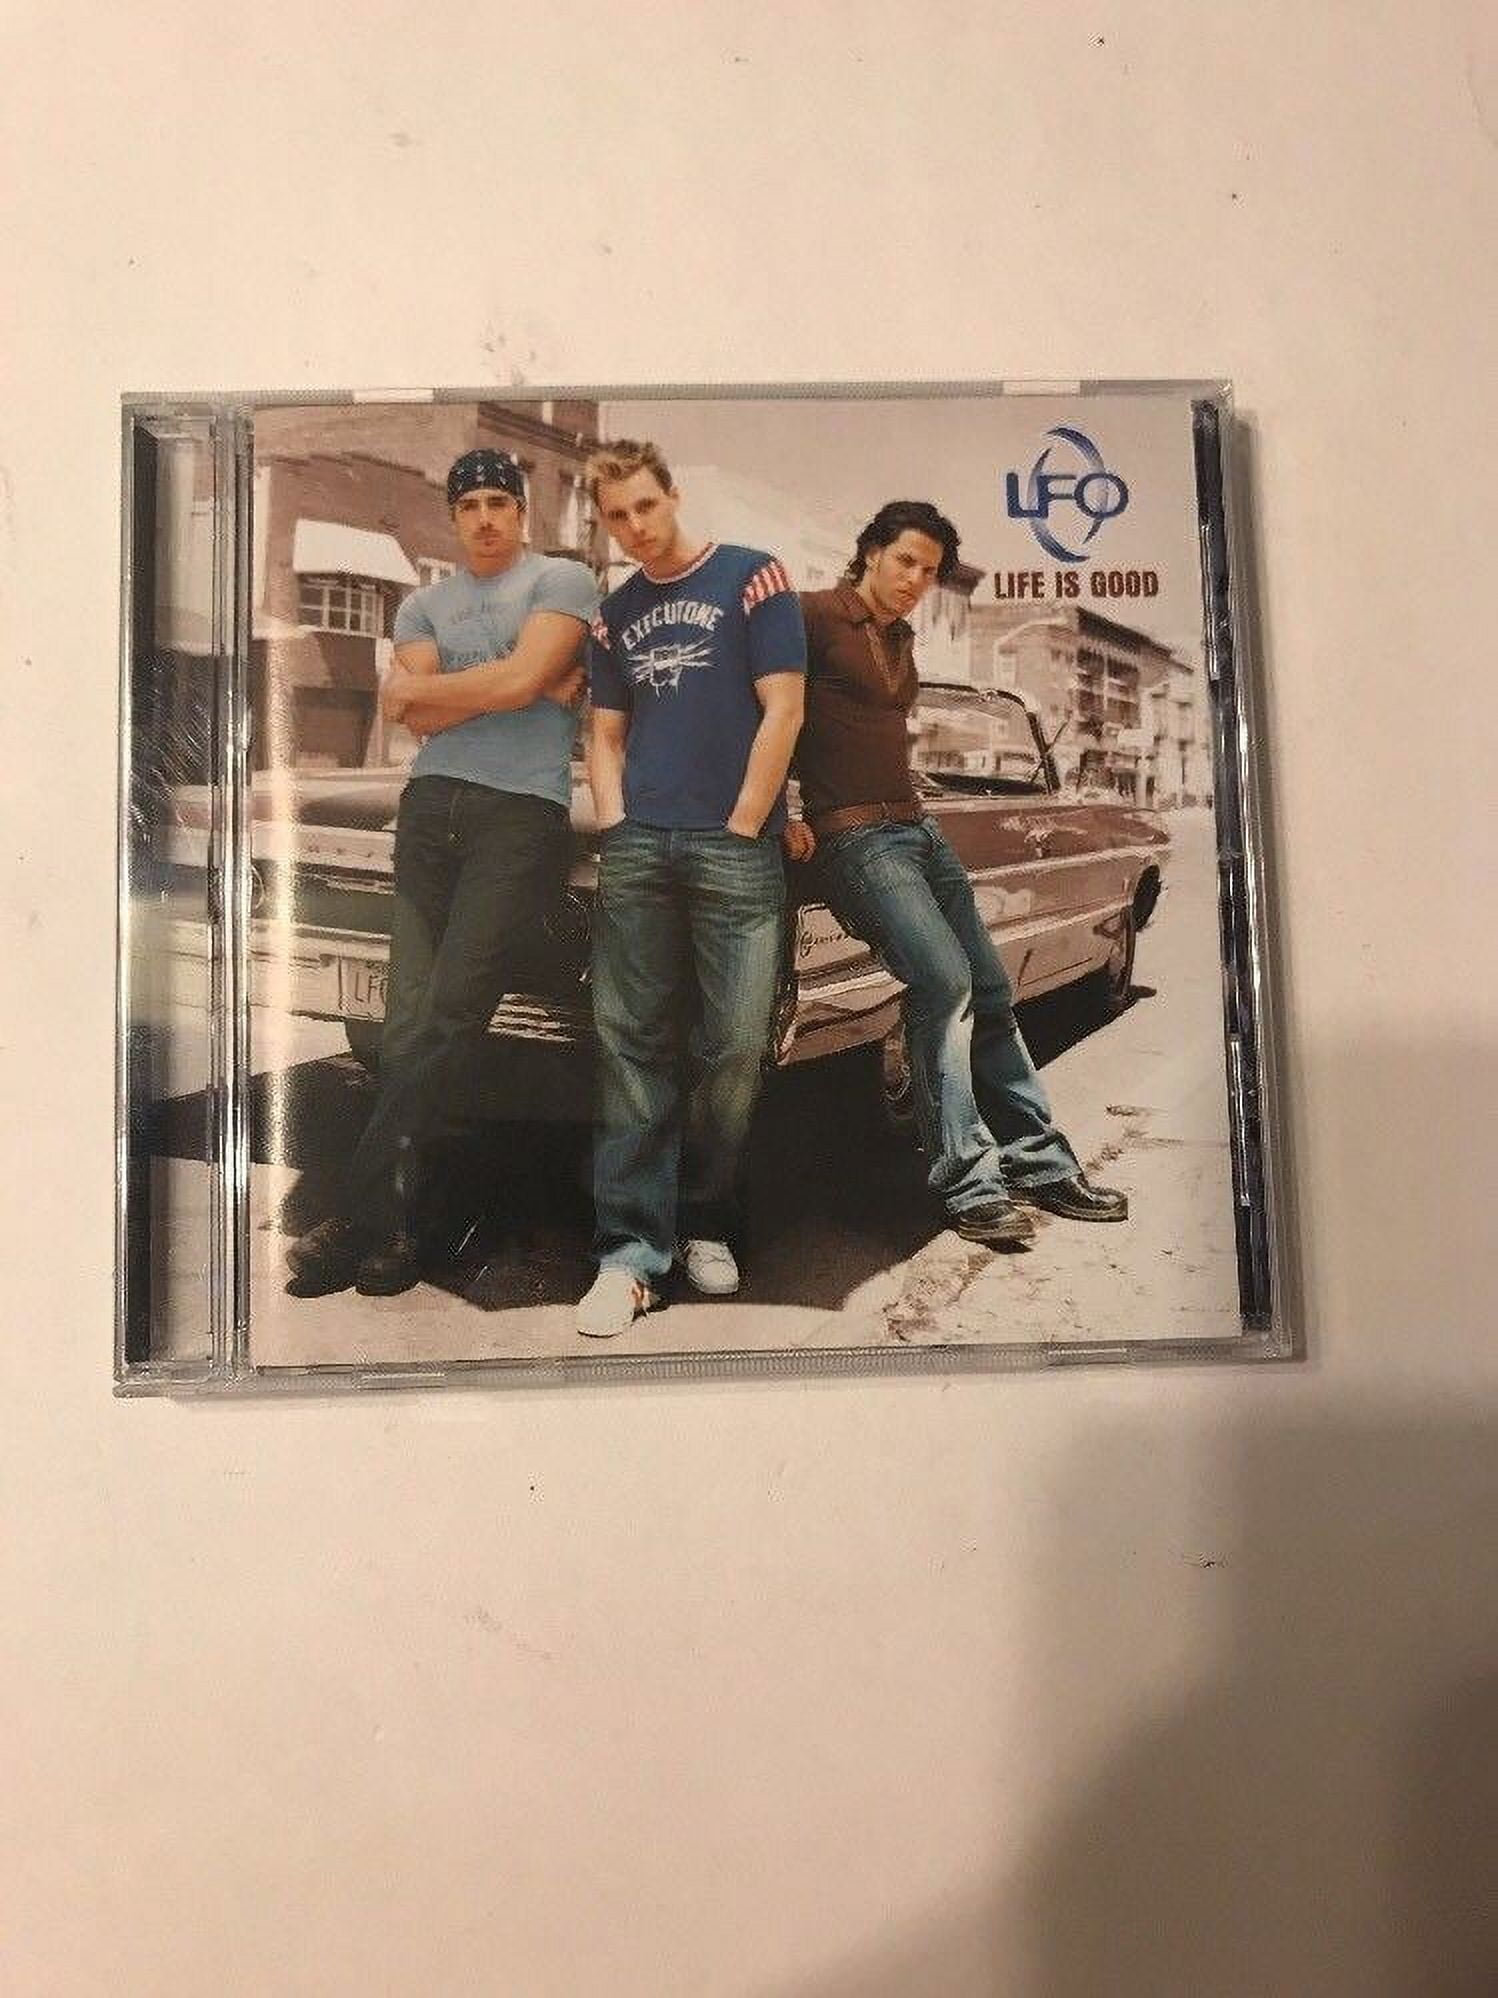 Pre-Owned - Life Is Good [Japan Bonus Tracks] by LFO (Pop) (CD, Jun-2001, J Records)